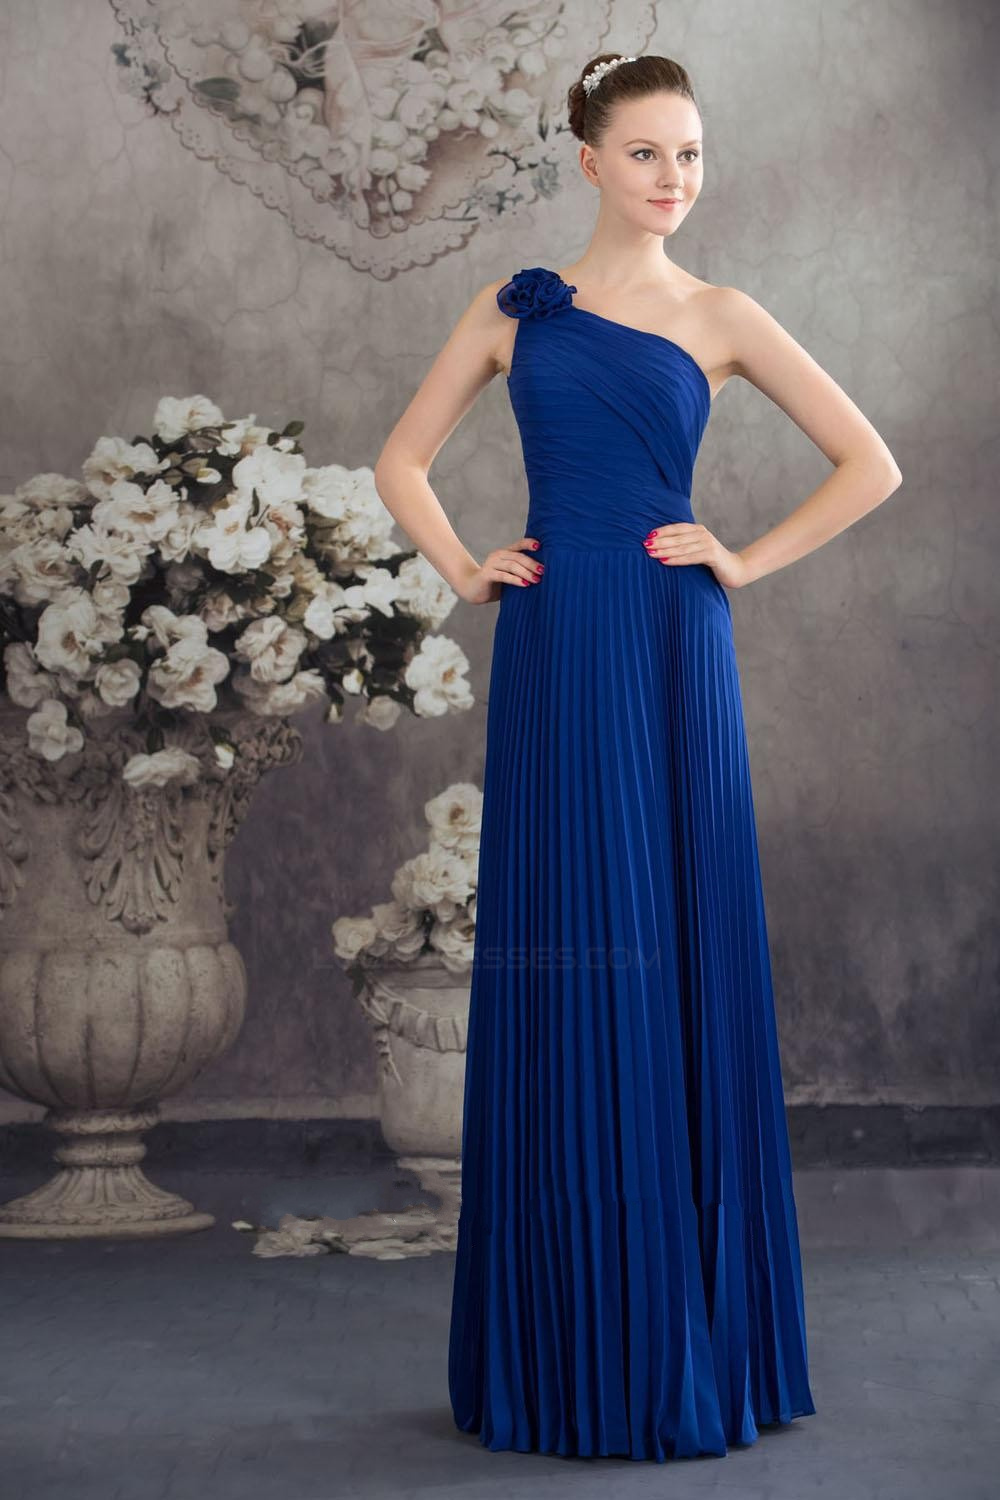 royal blue pleated dress